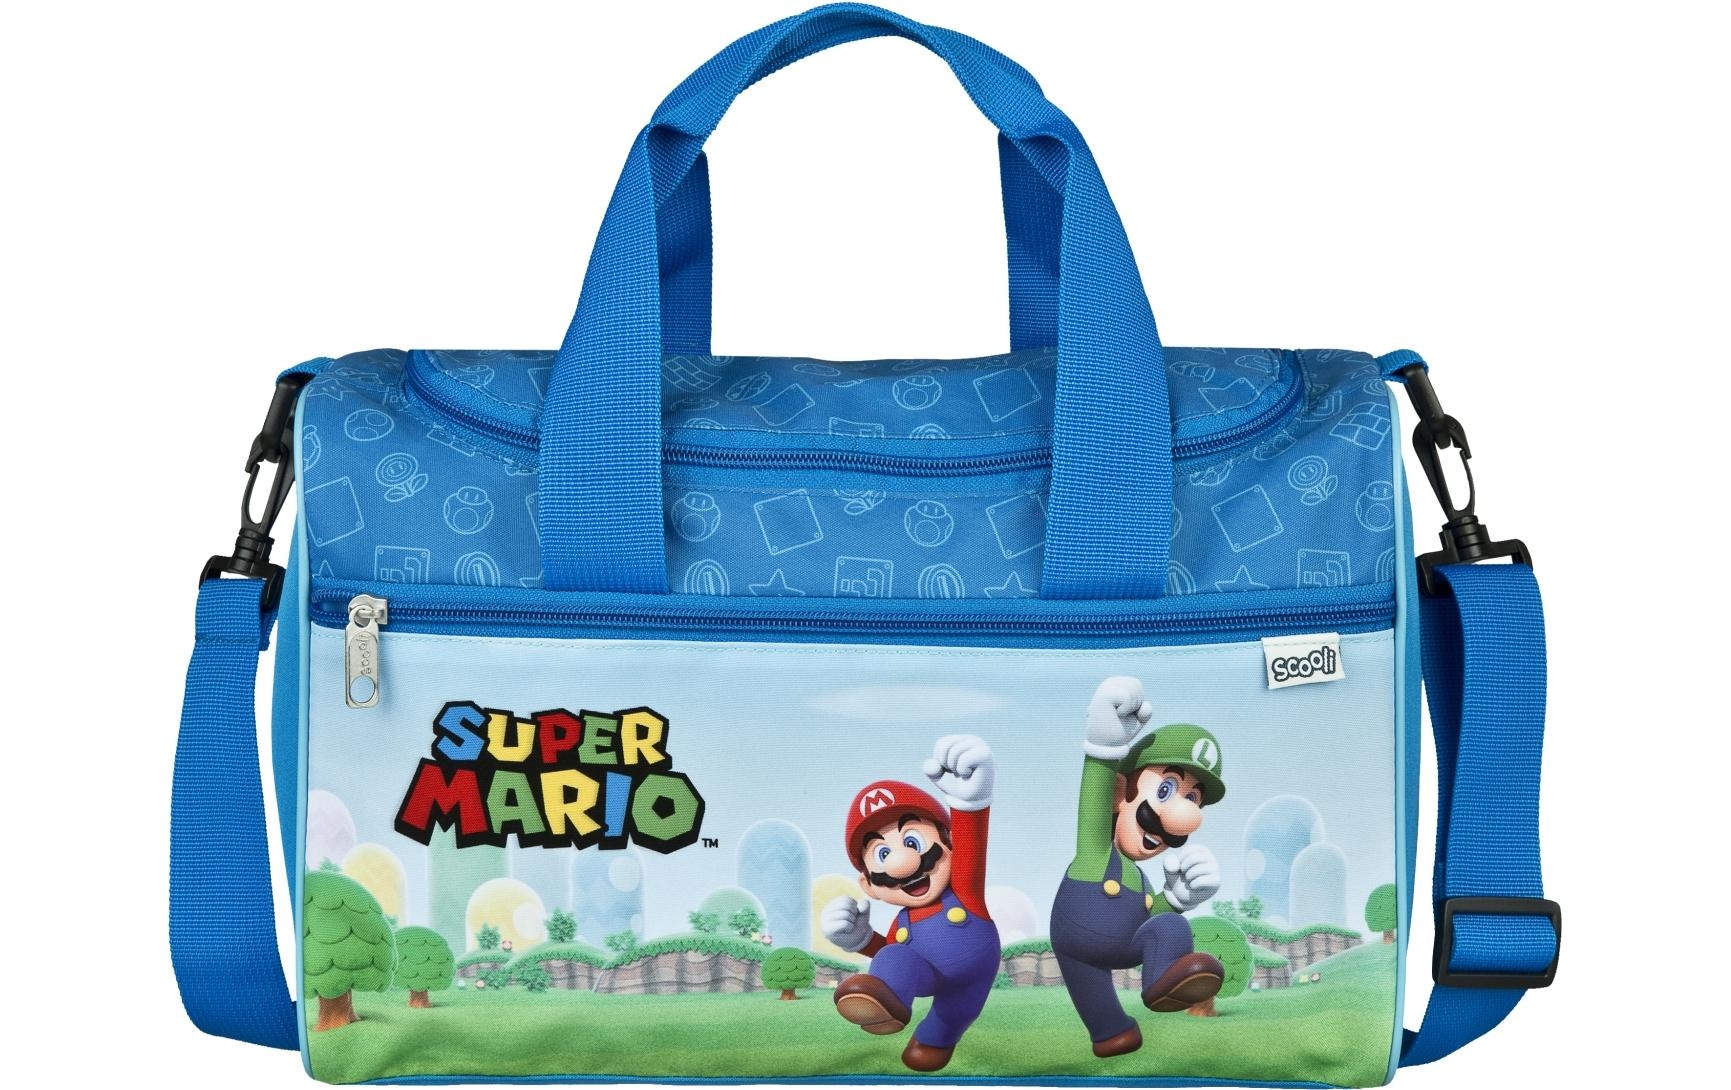 Scooli Sporttasche »Scooli Super Mario Super M«